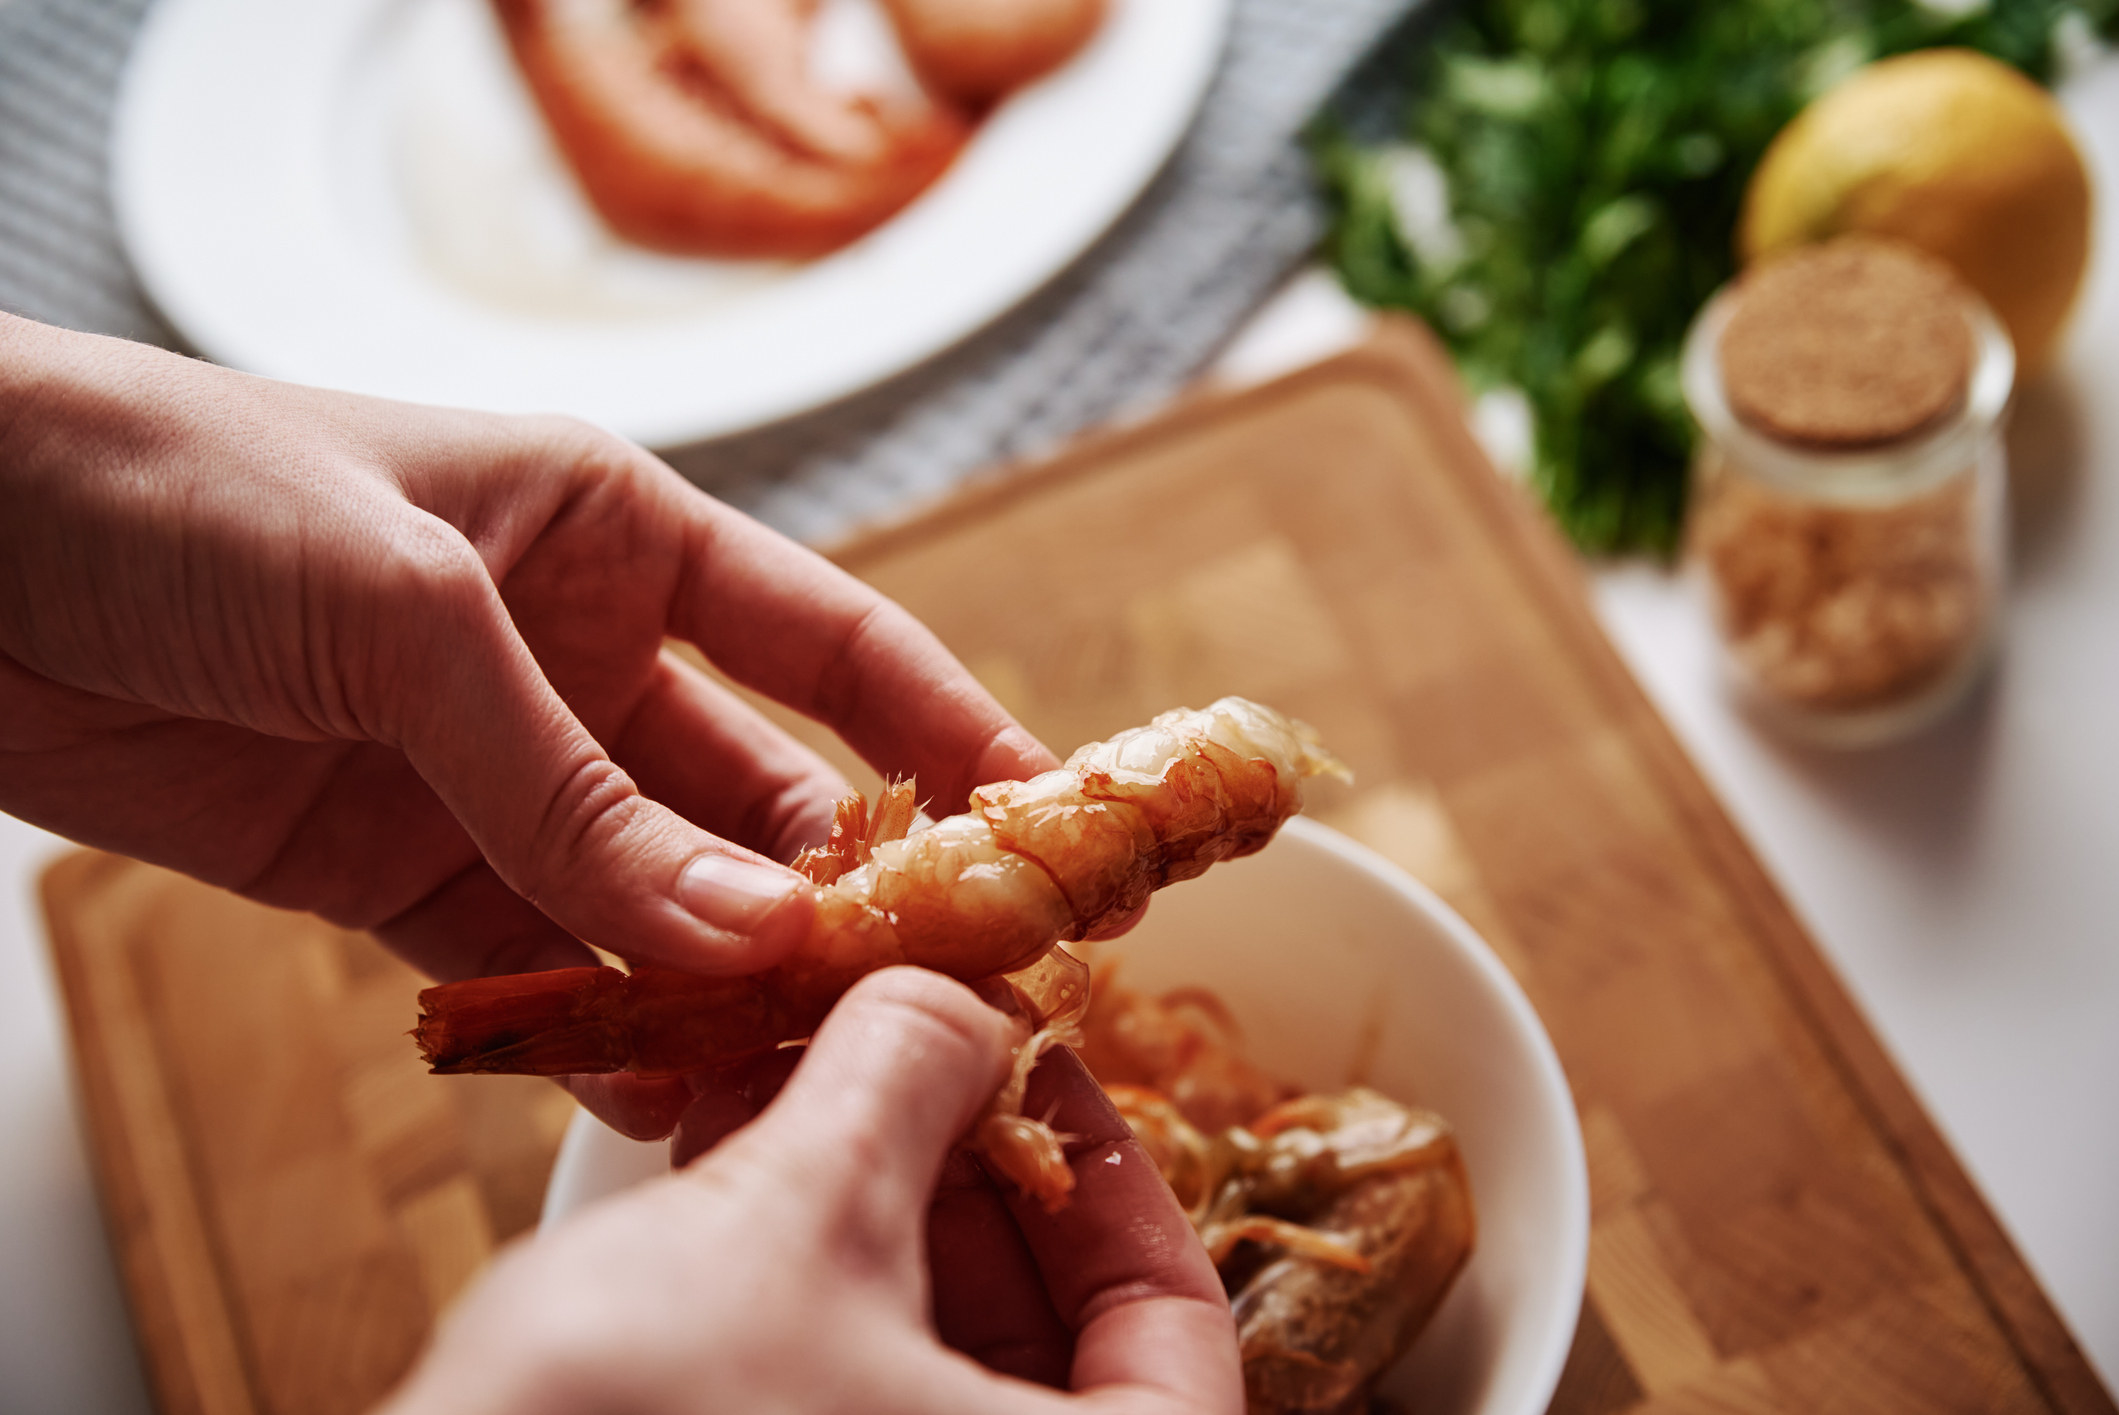 Peeling shrimp for cooking.